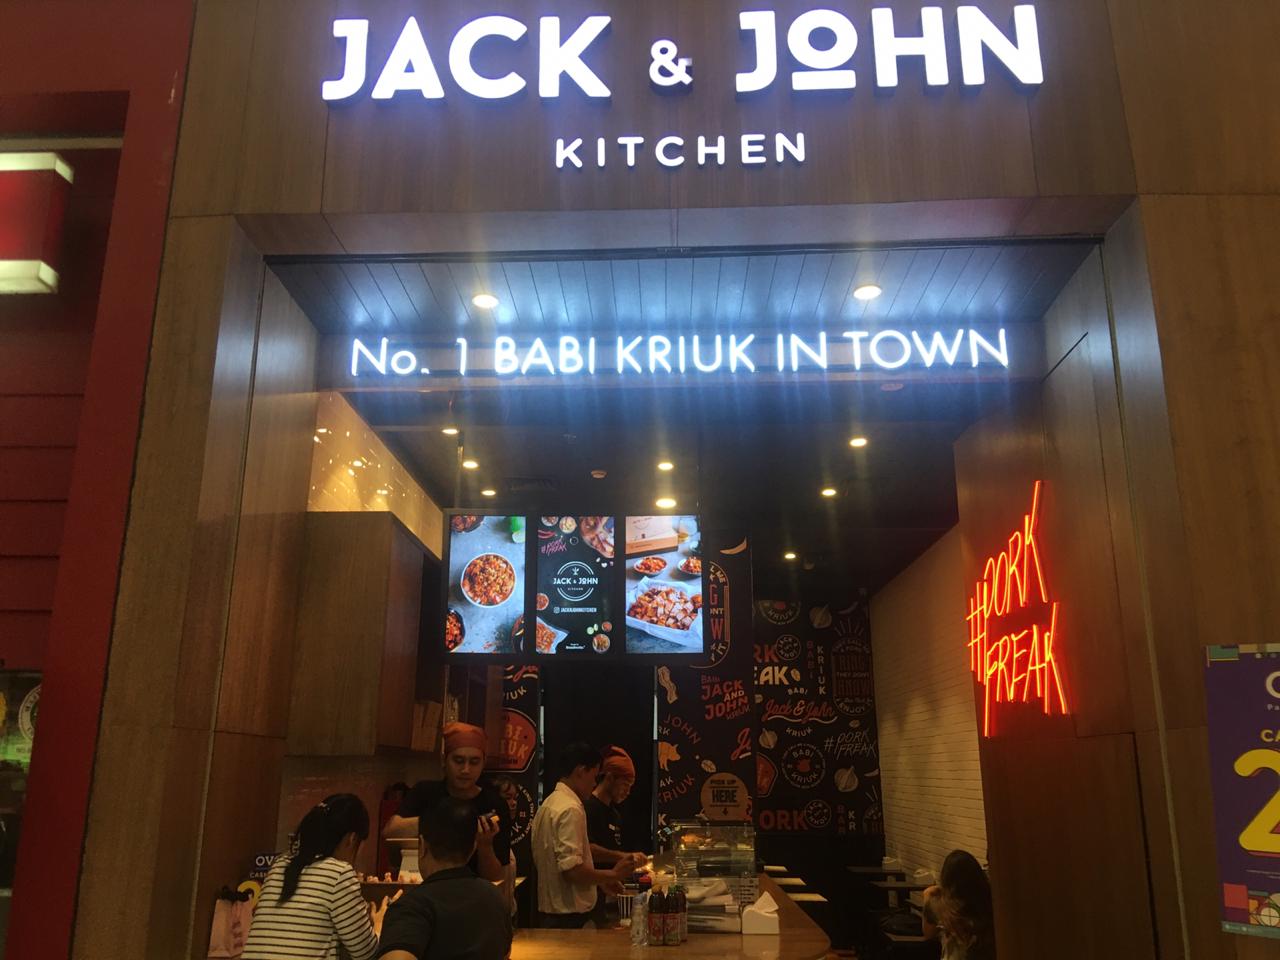 Jack & John shop front in lippo mall puri st. moritz